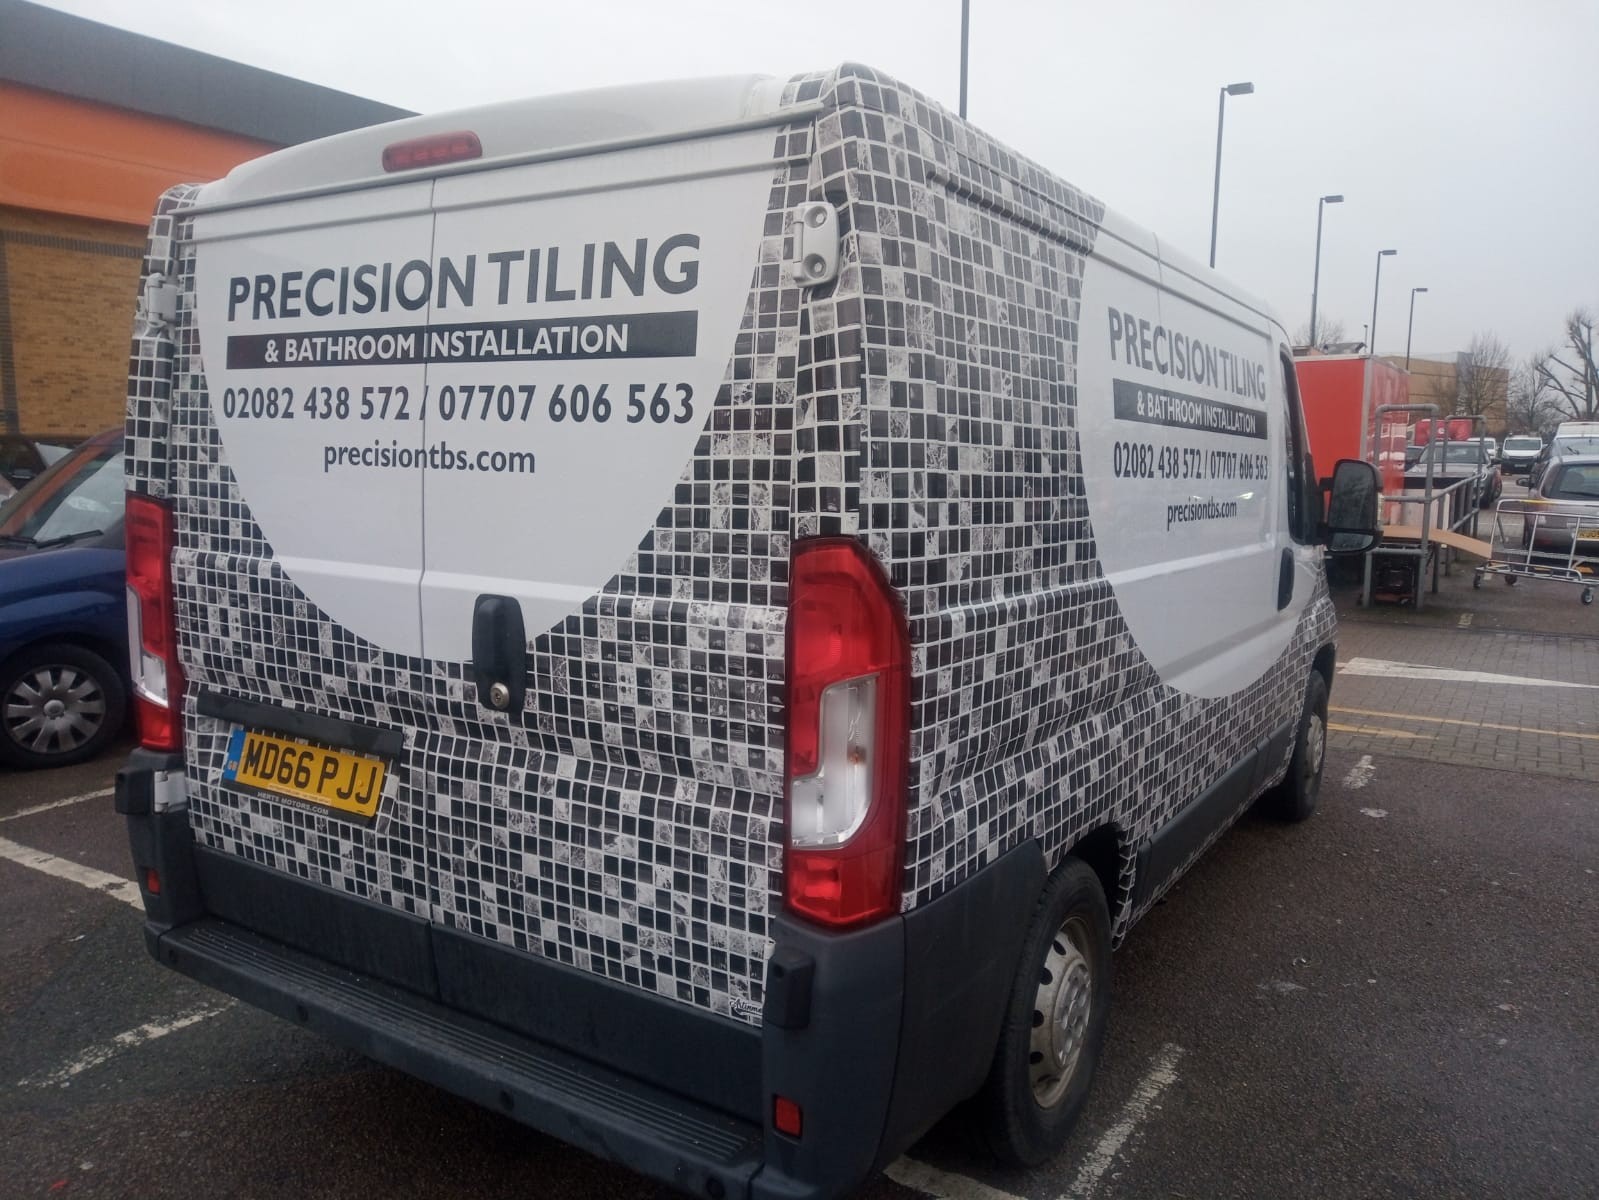 Precision Tiling & Bathroom Installation wrapped transit van